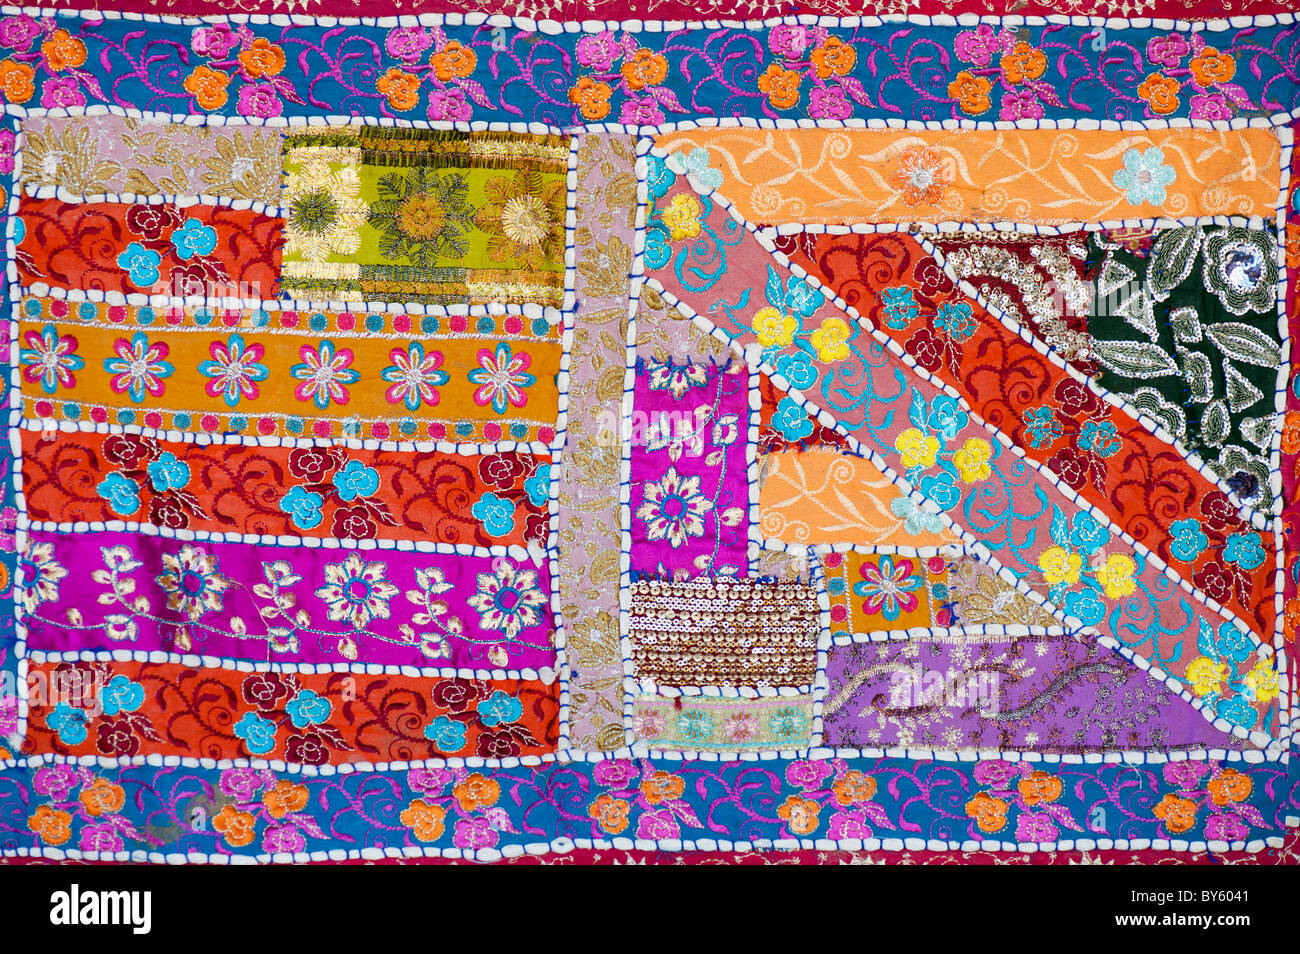 Tissu indien multicolore wall hanging. L'artisanat indien Banque D'Images